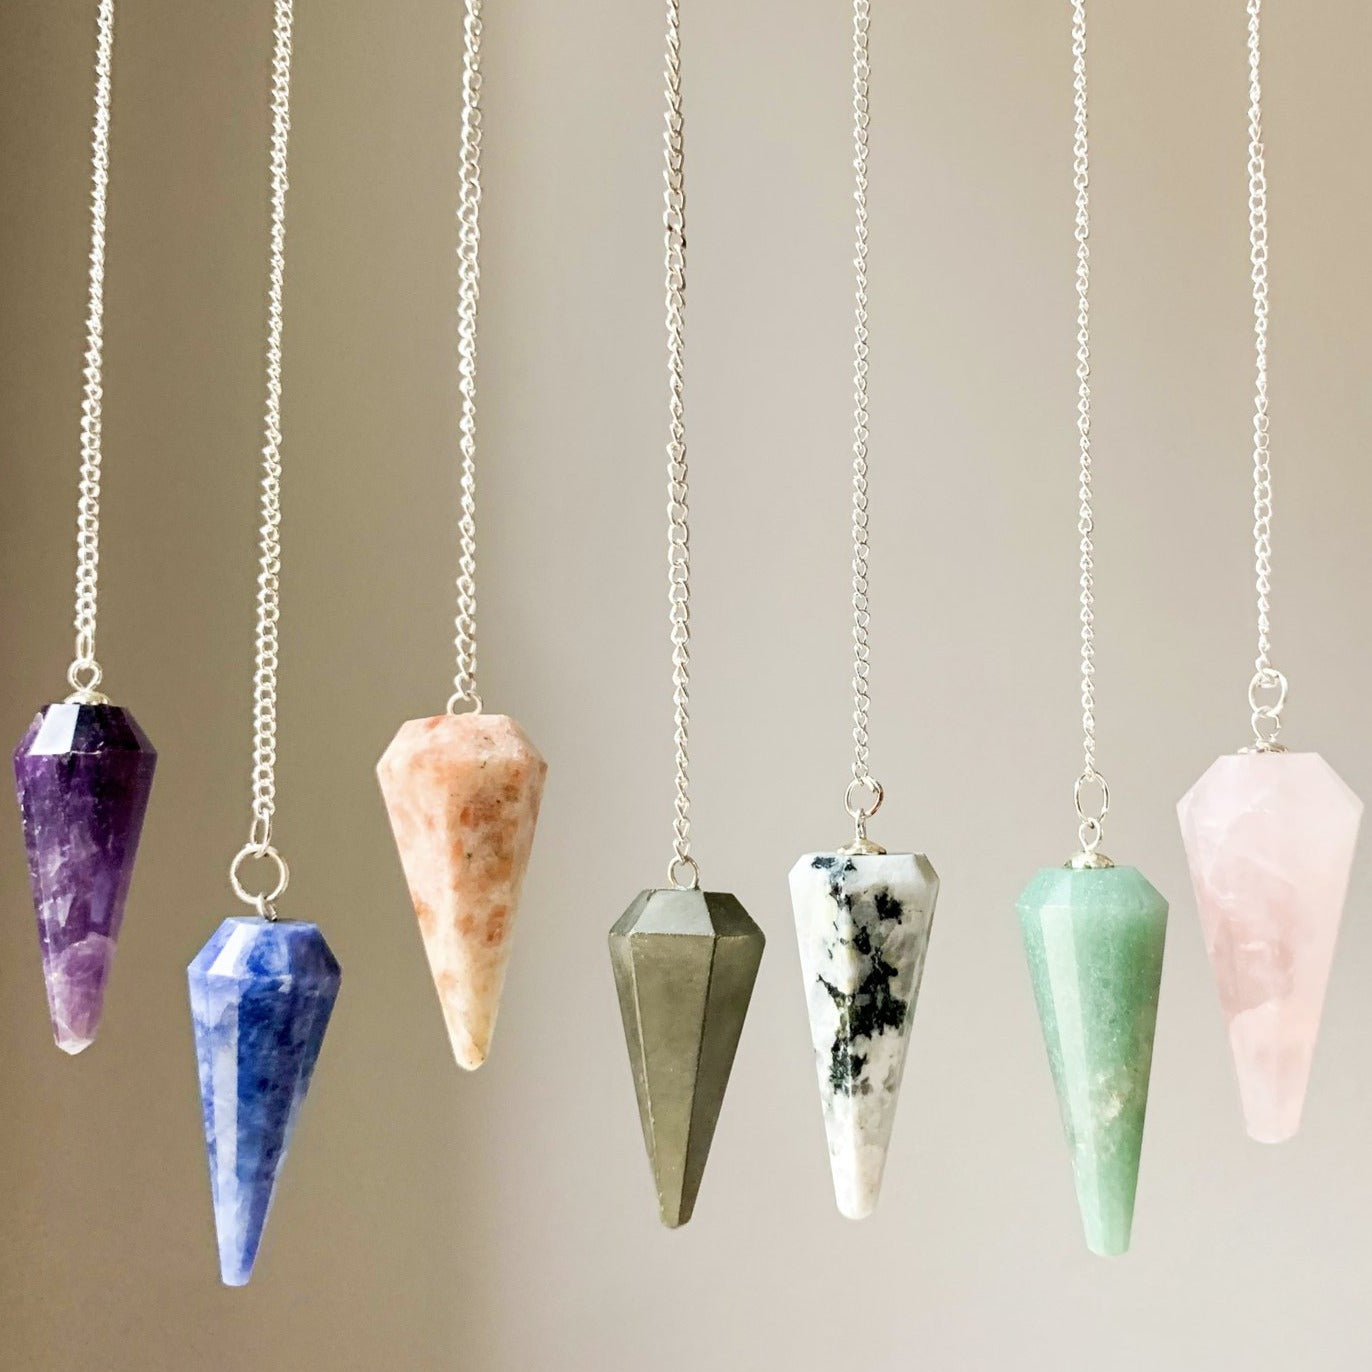 Crystal hanging pendulum